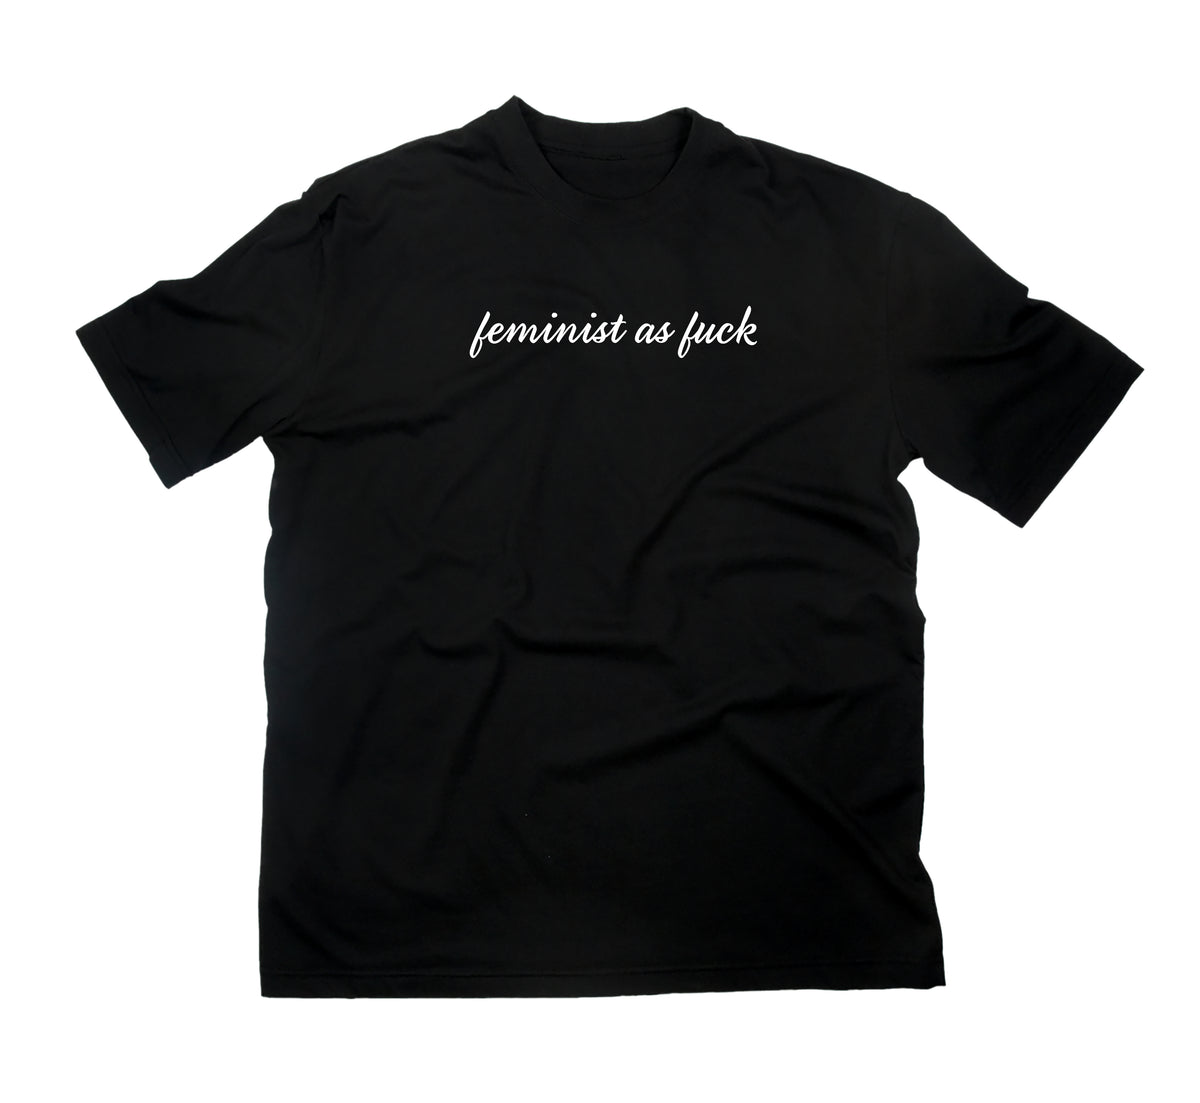 Camiseta feminista como mierda